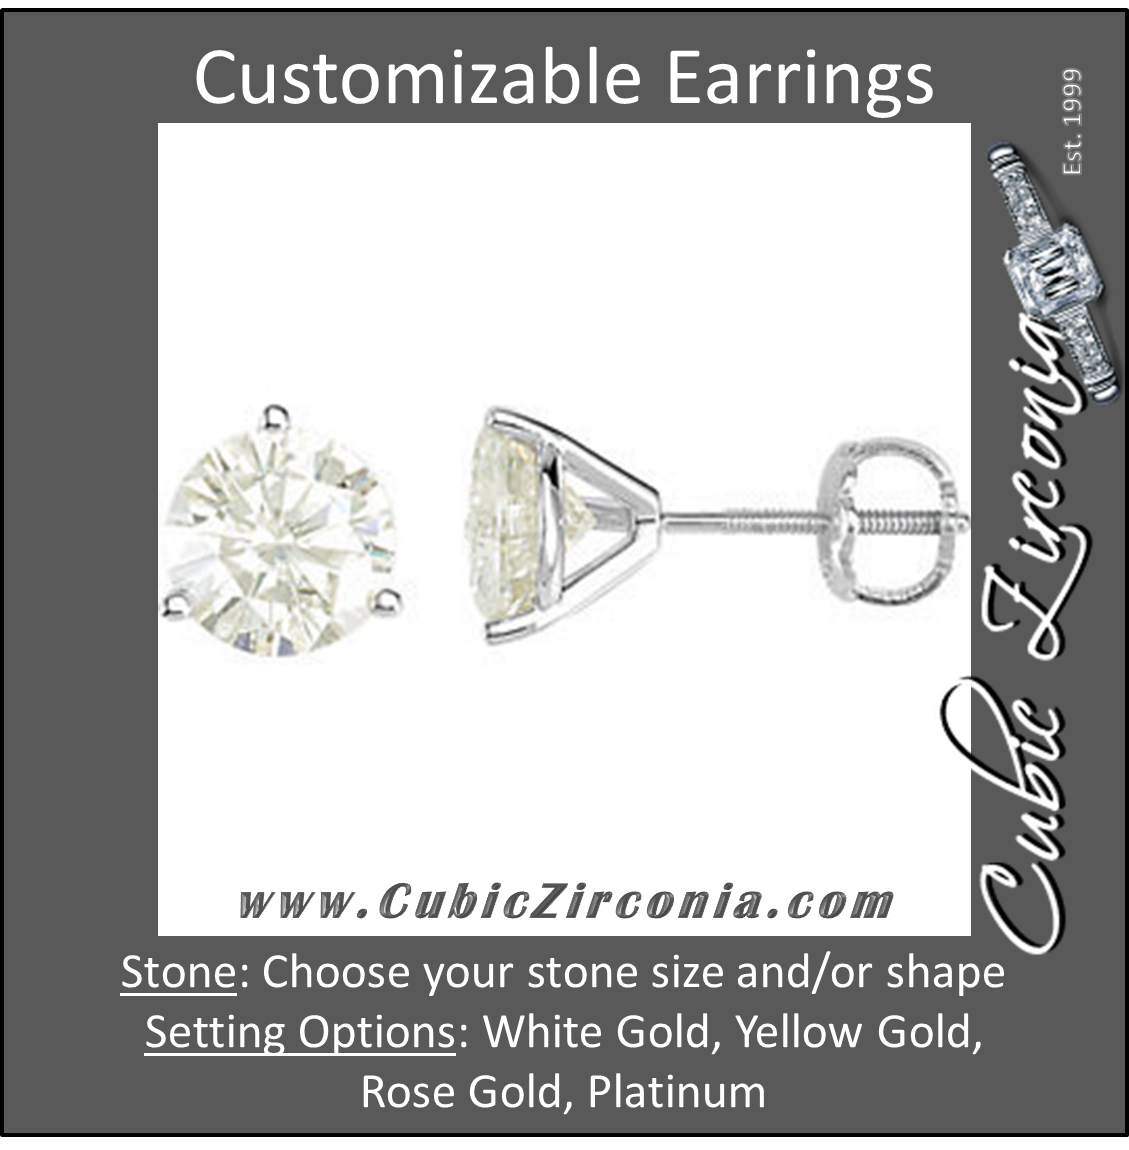 Cubic Zirconia Earrings- Customizable 3-Prong Round Cut Stud Earring Set